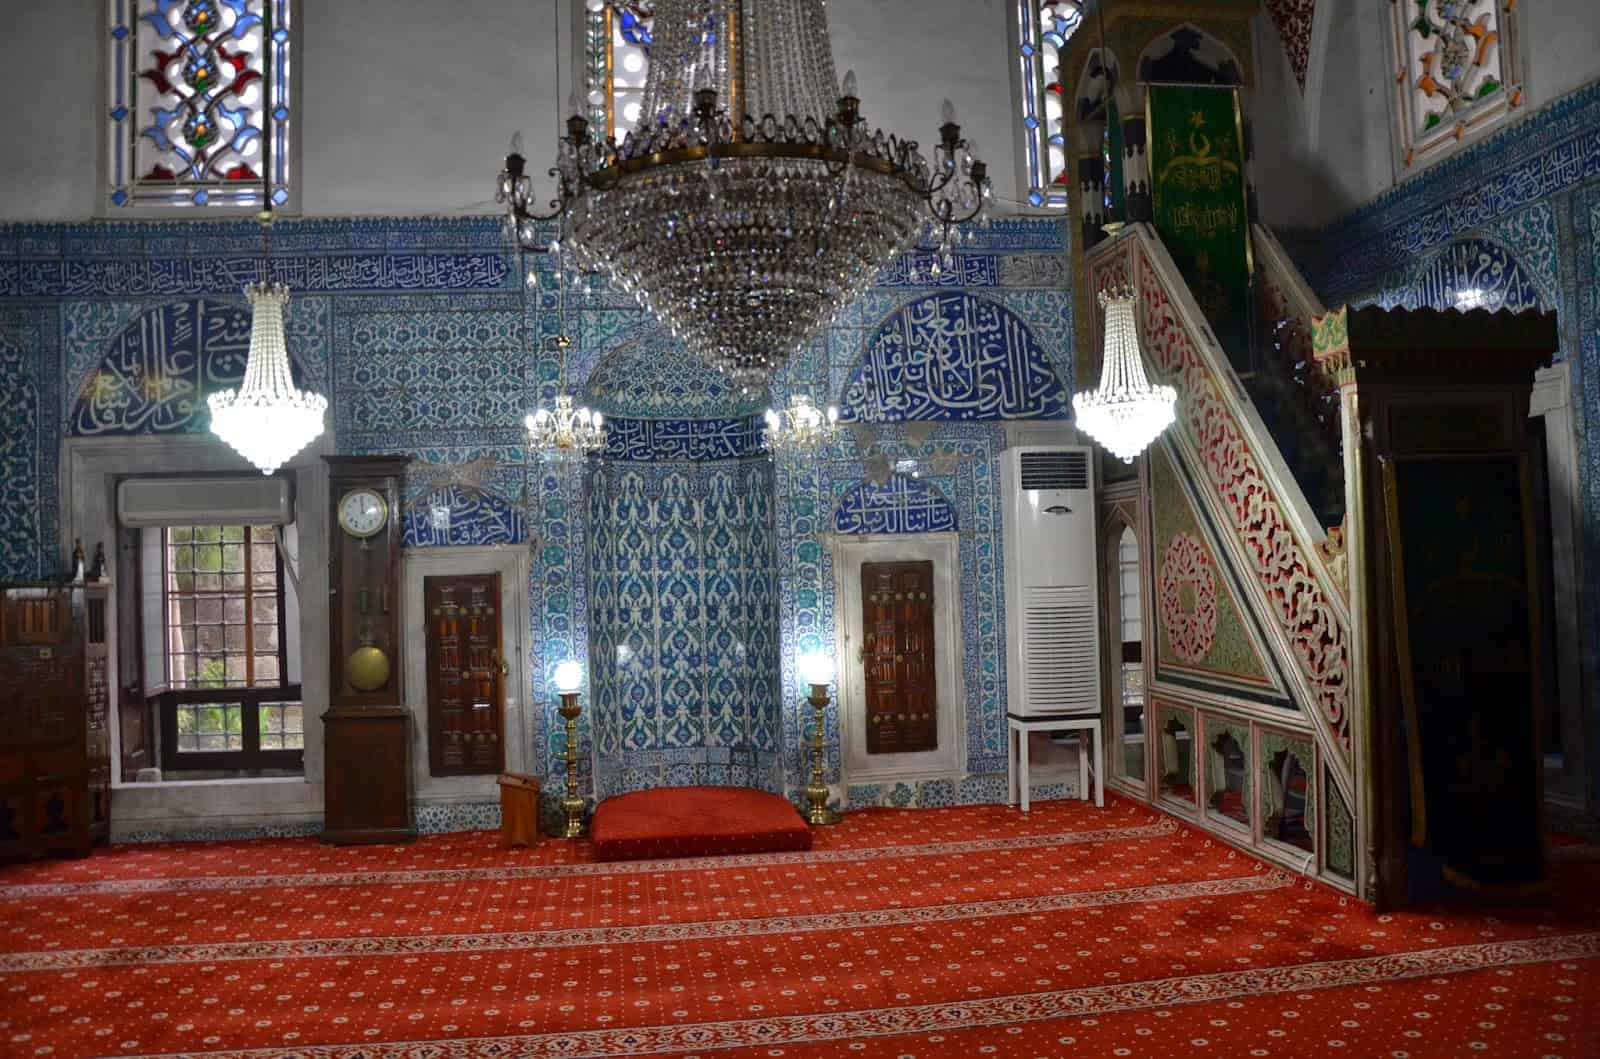 Prayer hall of the Tiled Mosque in Üsküdar, Istanbul, Turkey